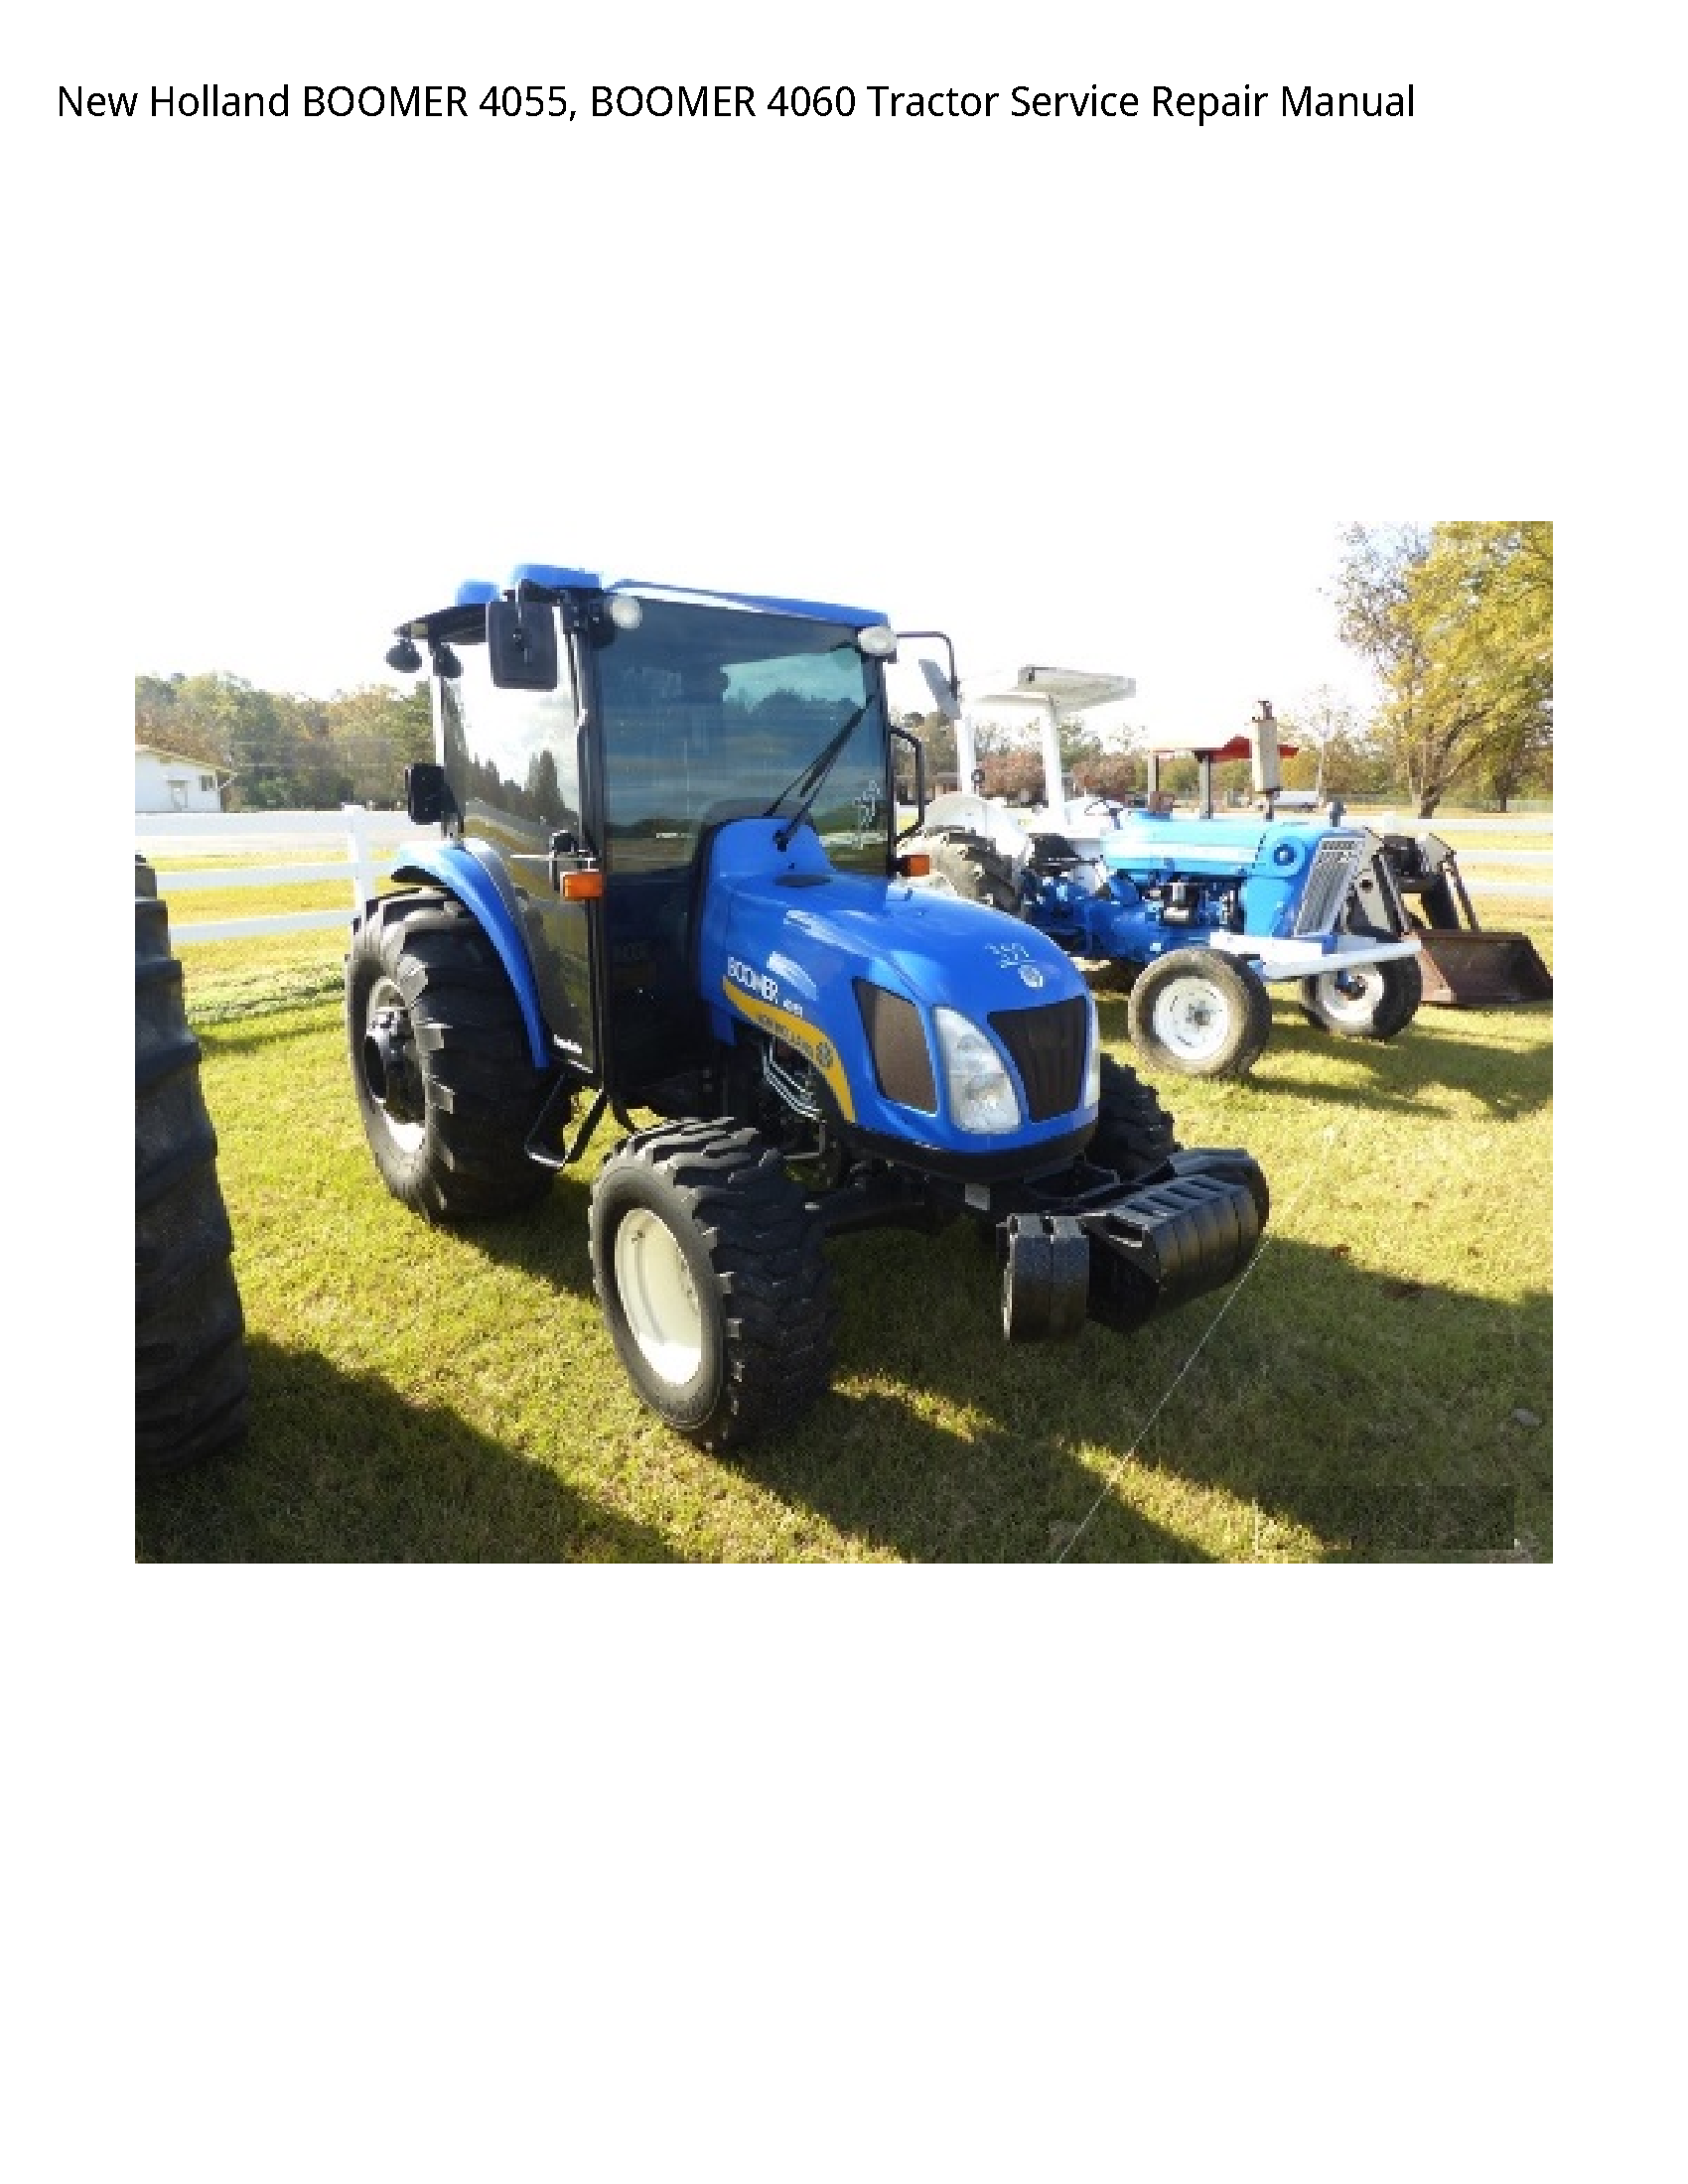 New Holland 4055 BOOMER BOOMER Tractor manual